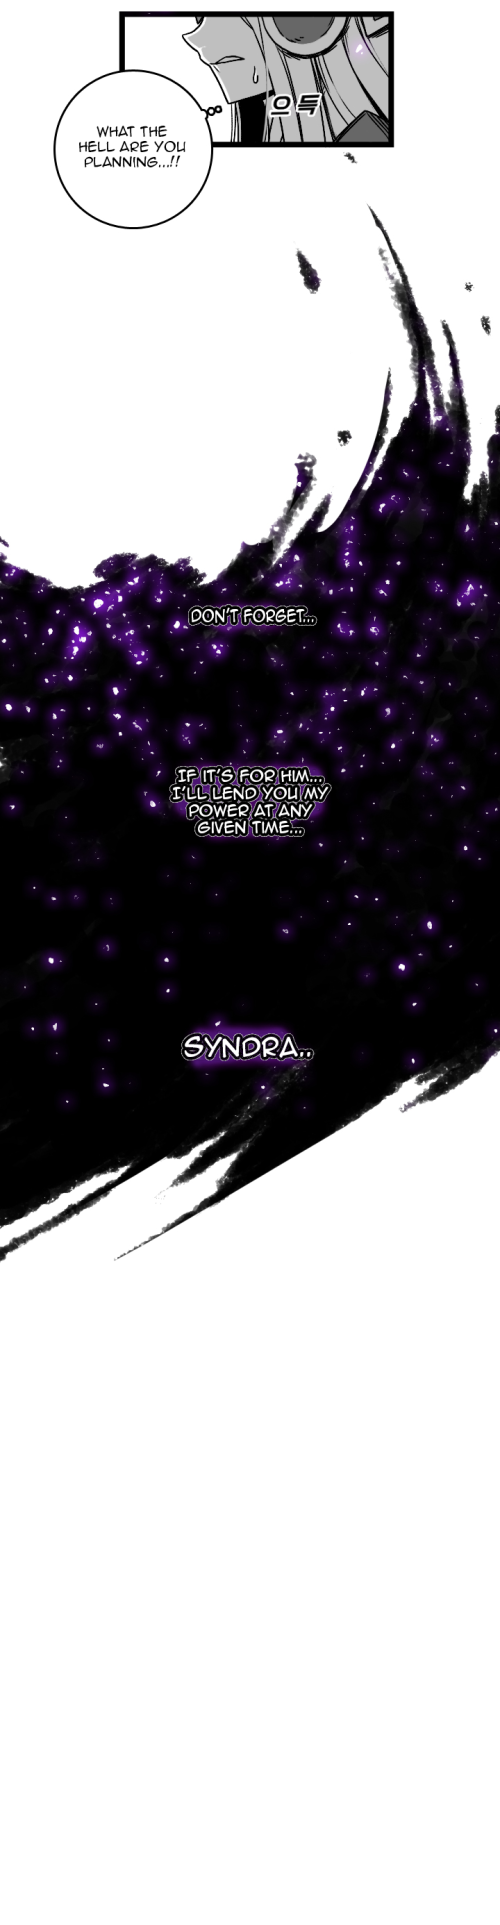 Syndra and Zeds Ordinary Life Season 3 - part 17